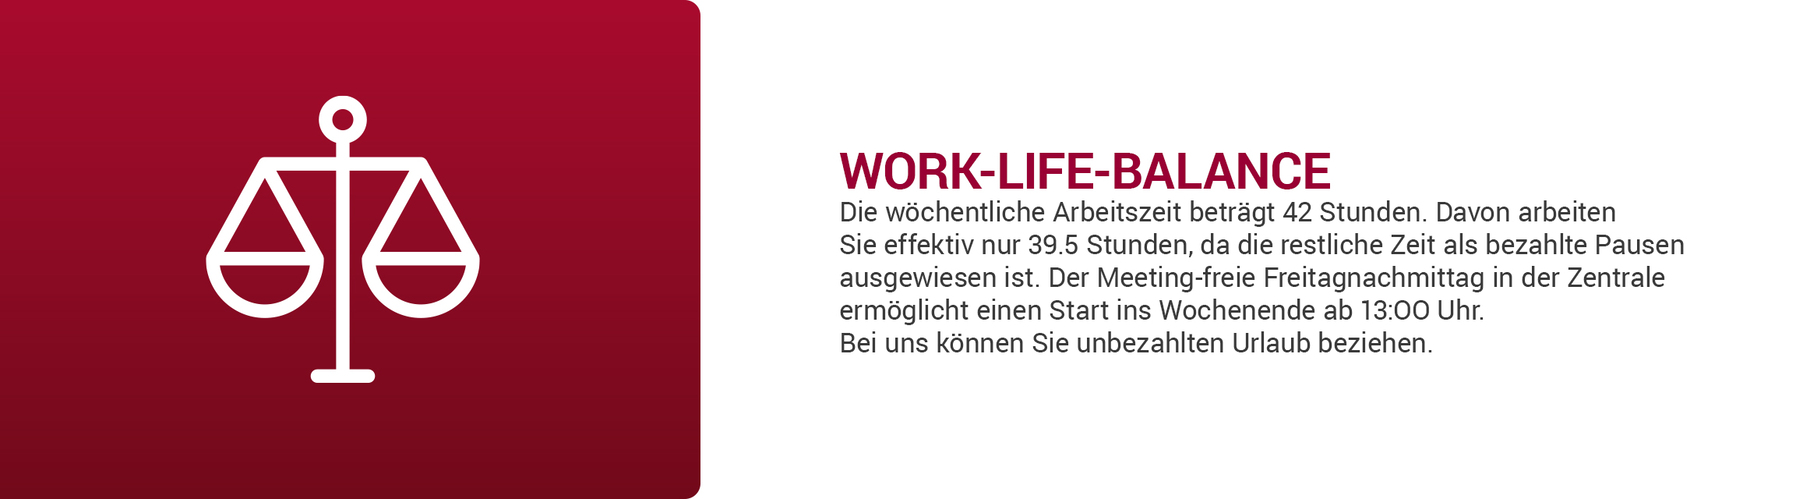 O_23-37_Jobs-worklife_nwide_de_02.jpg